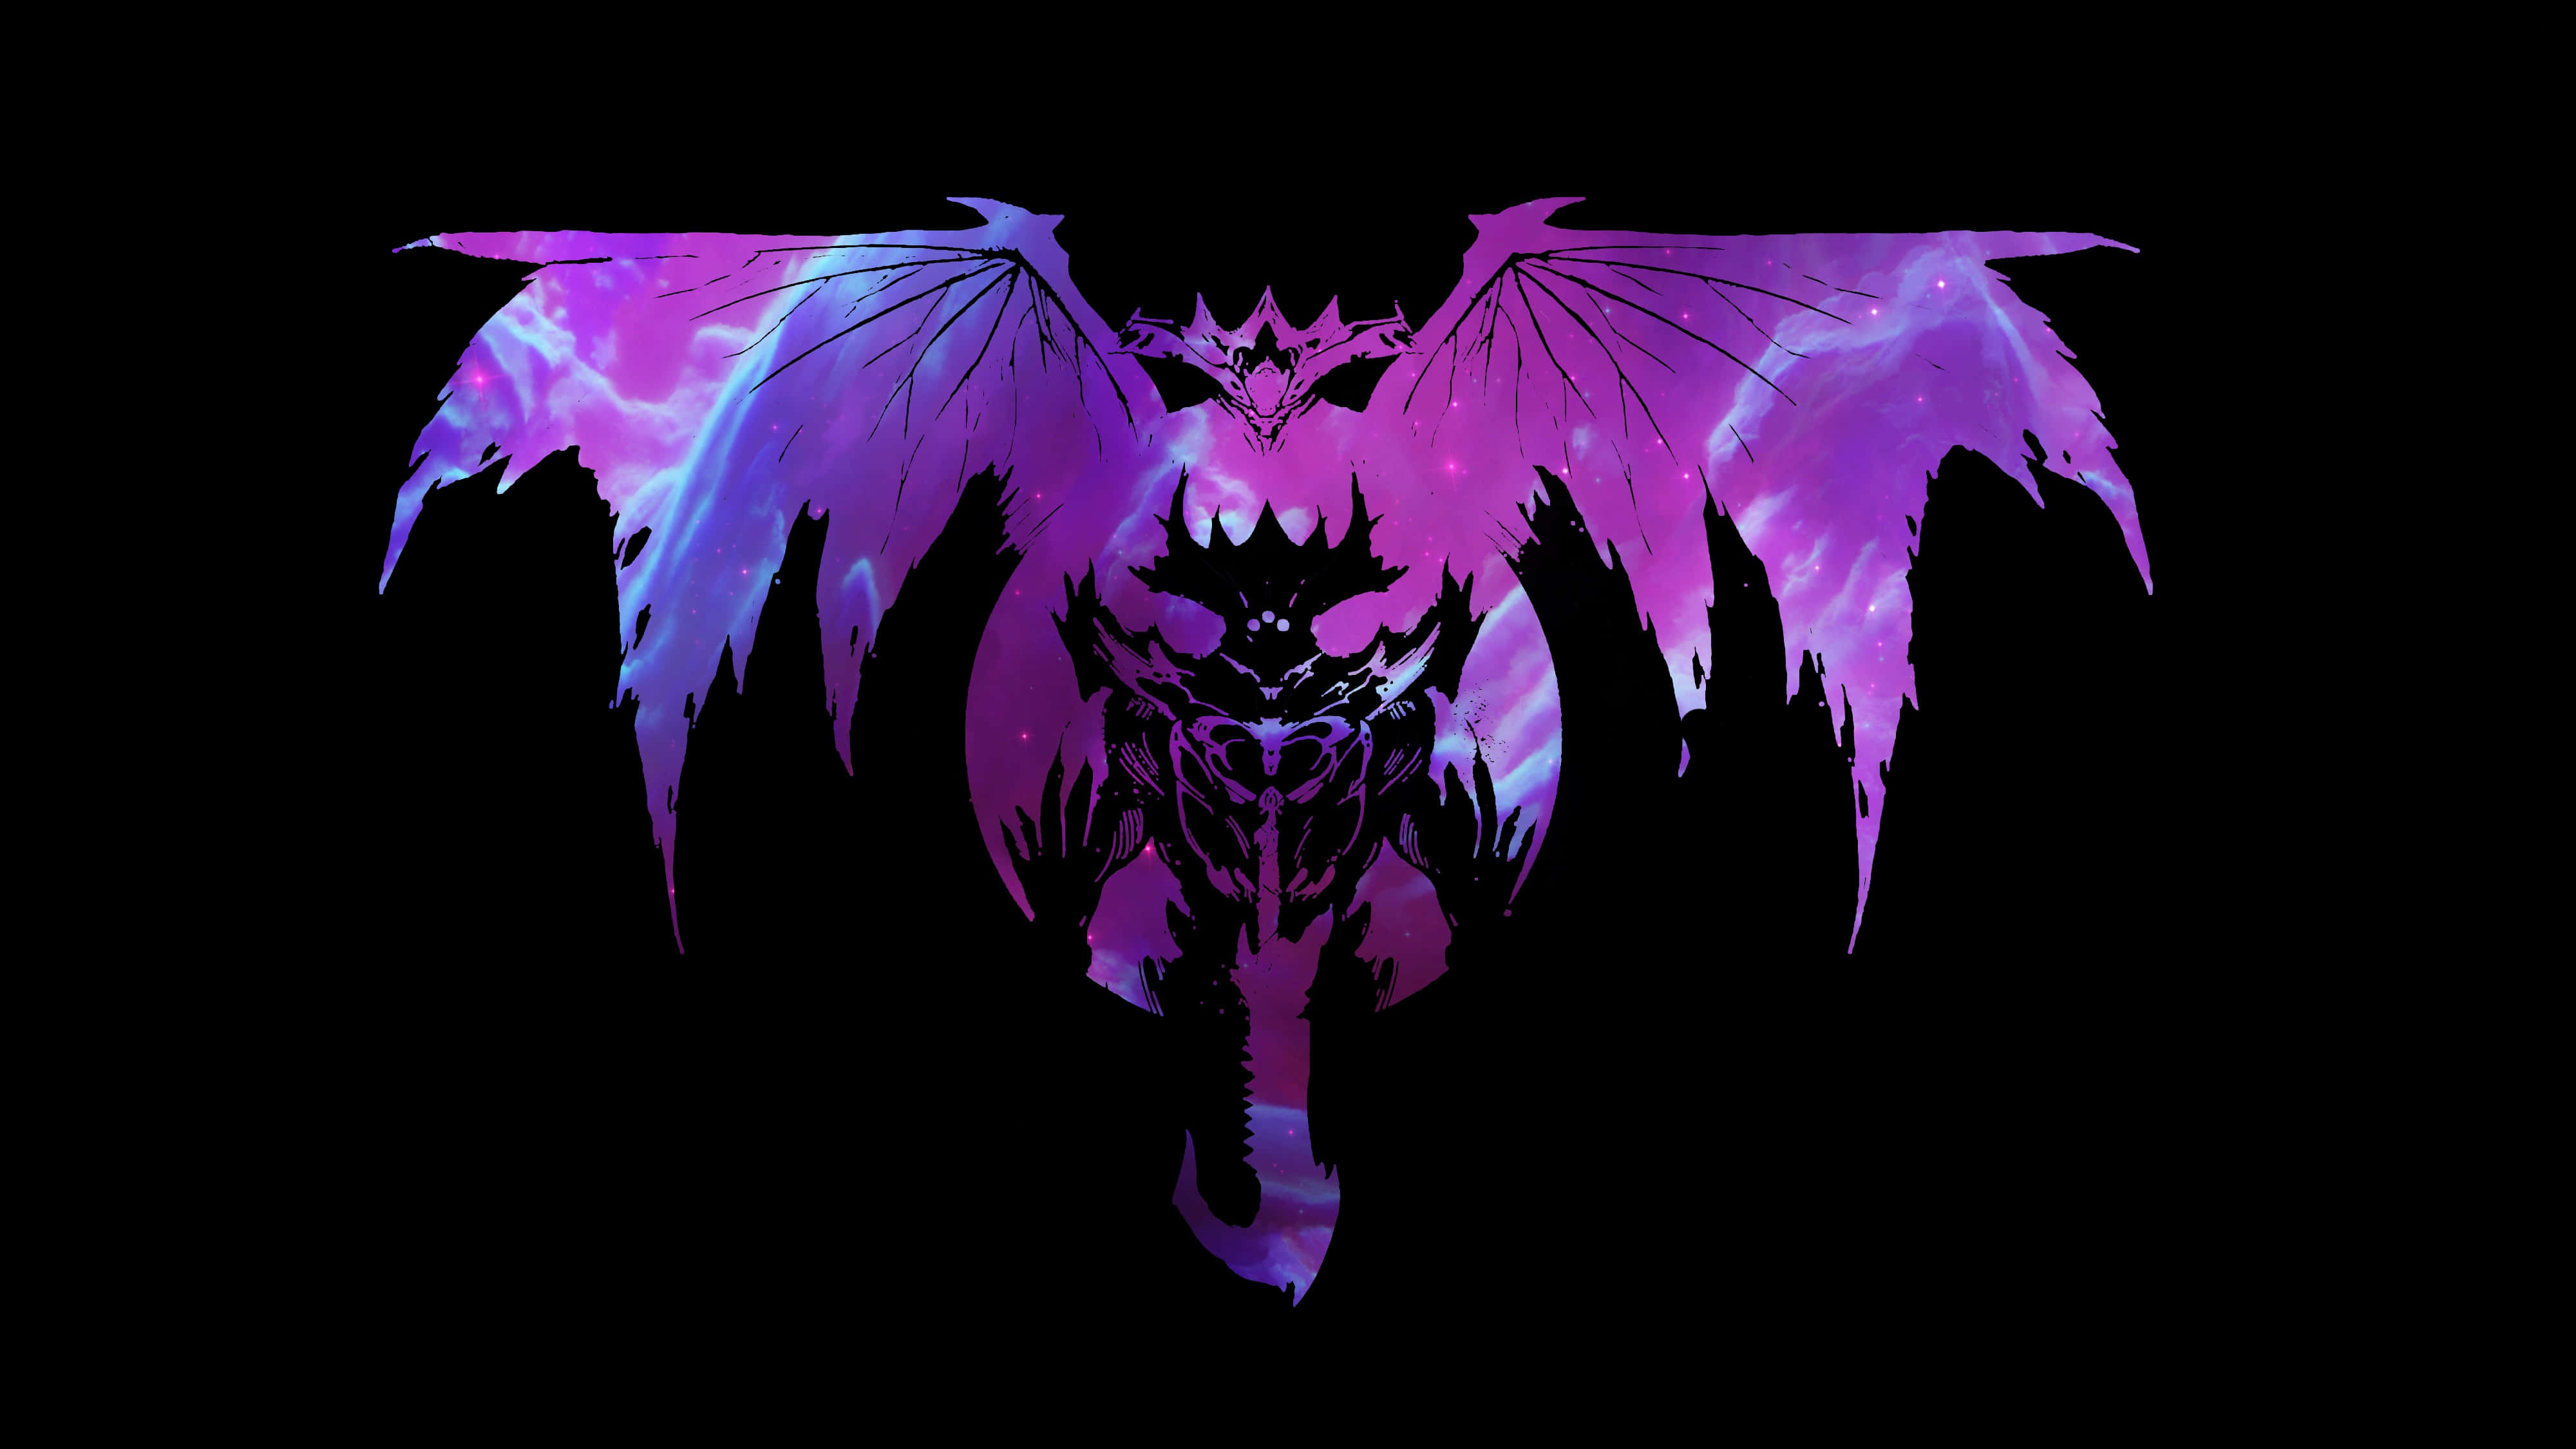 Destiny's Oryx: The Taken King In His Full Glory Wallpaper